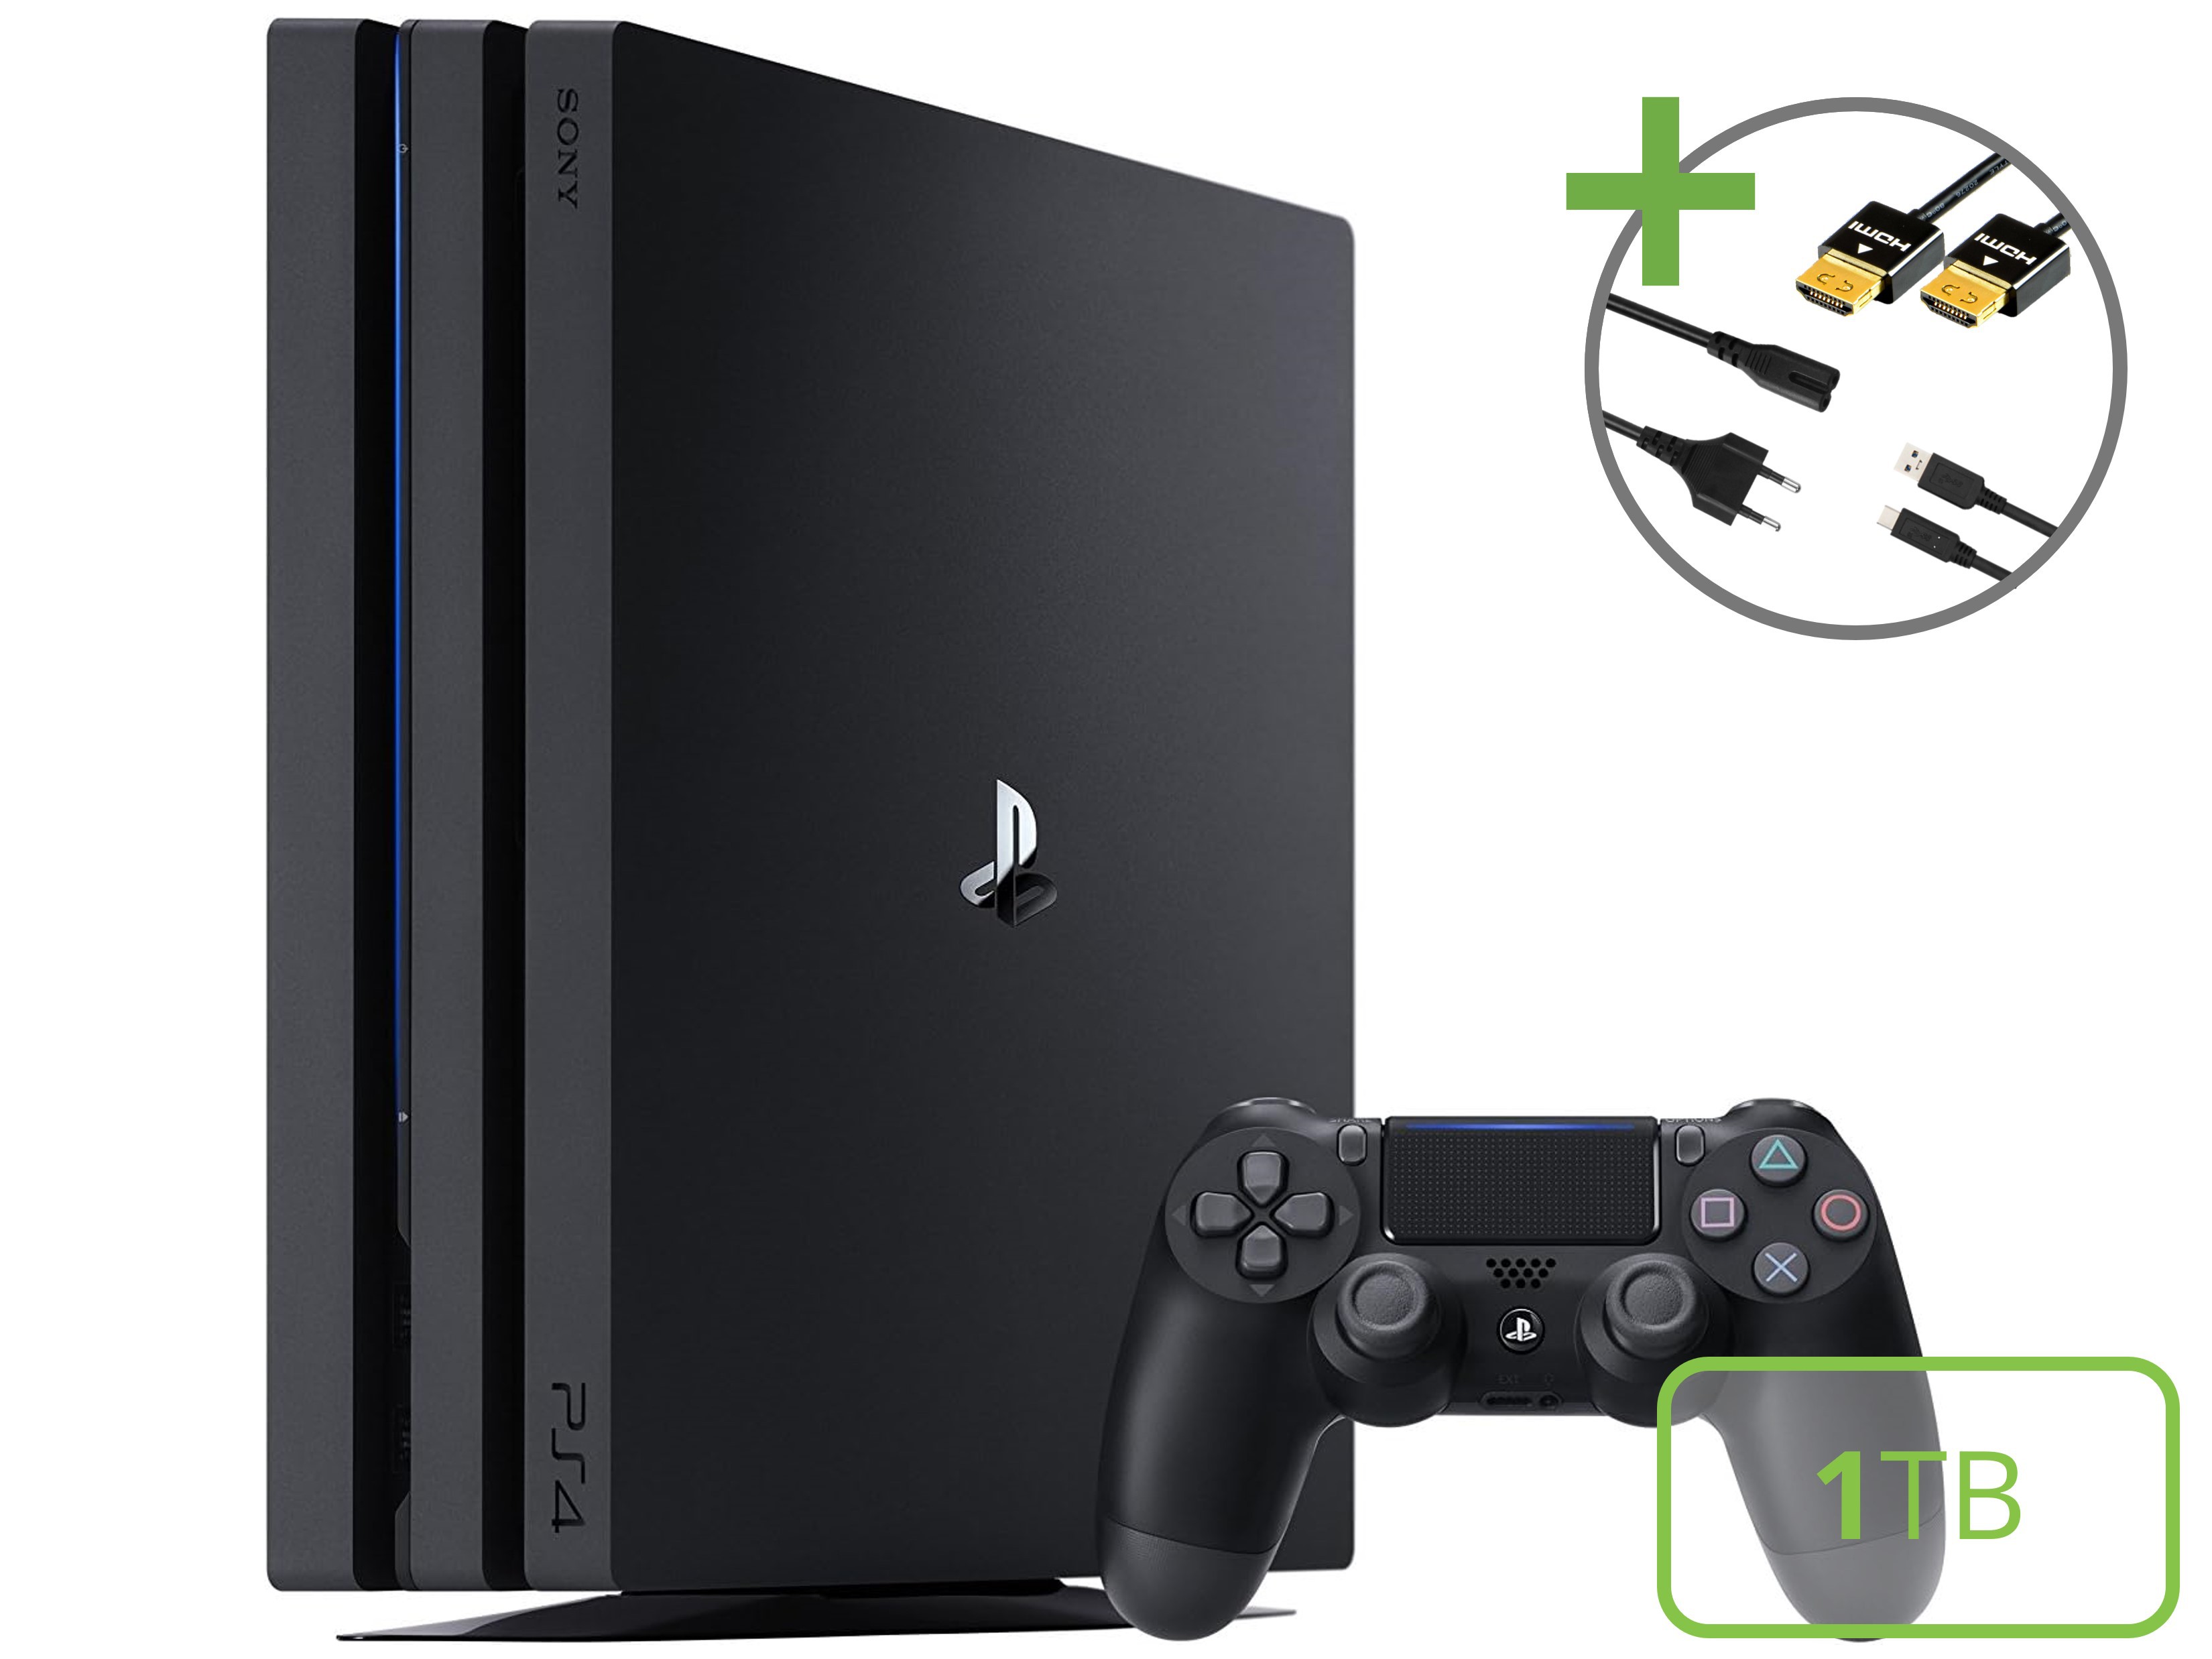 Sony PlayStation 4 Pro Starter Pack - 1TB Grand Theft Auto V Edition - Playstation 4 Hardware - 2